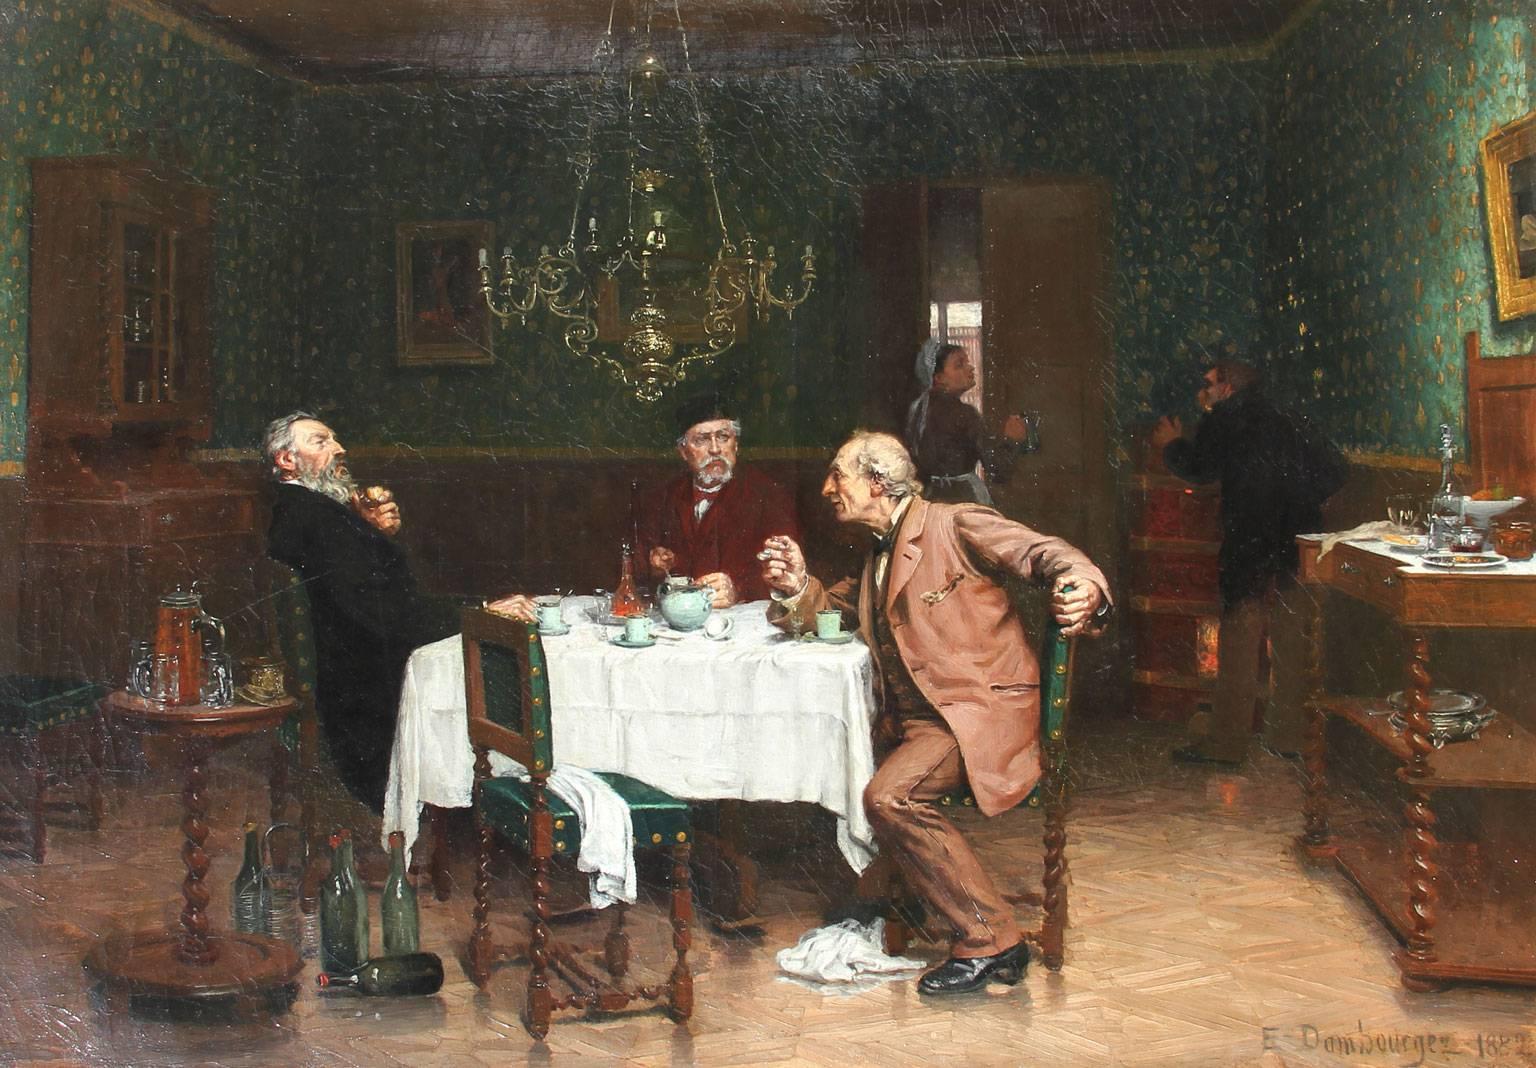 Edouard-Jean Dambourgez Figurative Painting - Chez un Ami, Oil on Canvas, Signed E. Dambourgez 1882, French